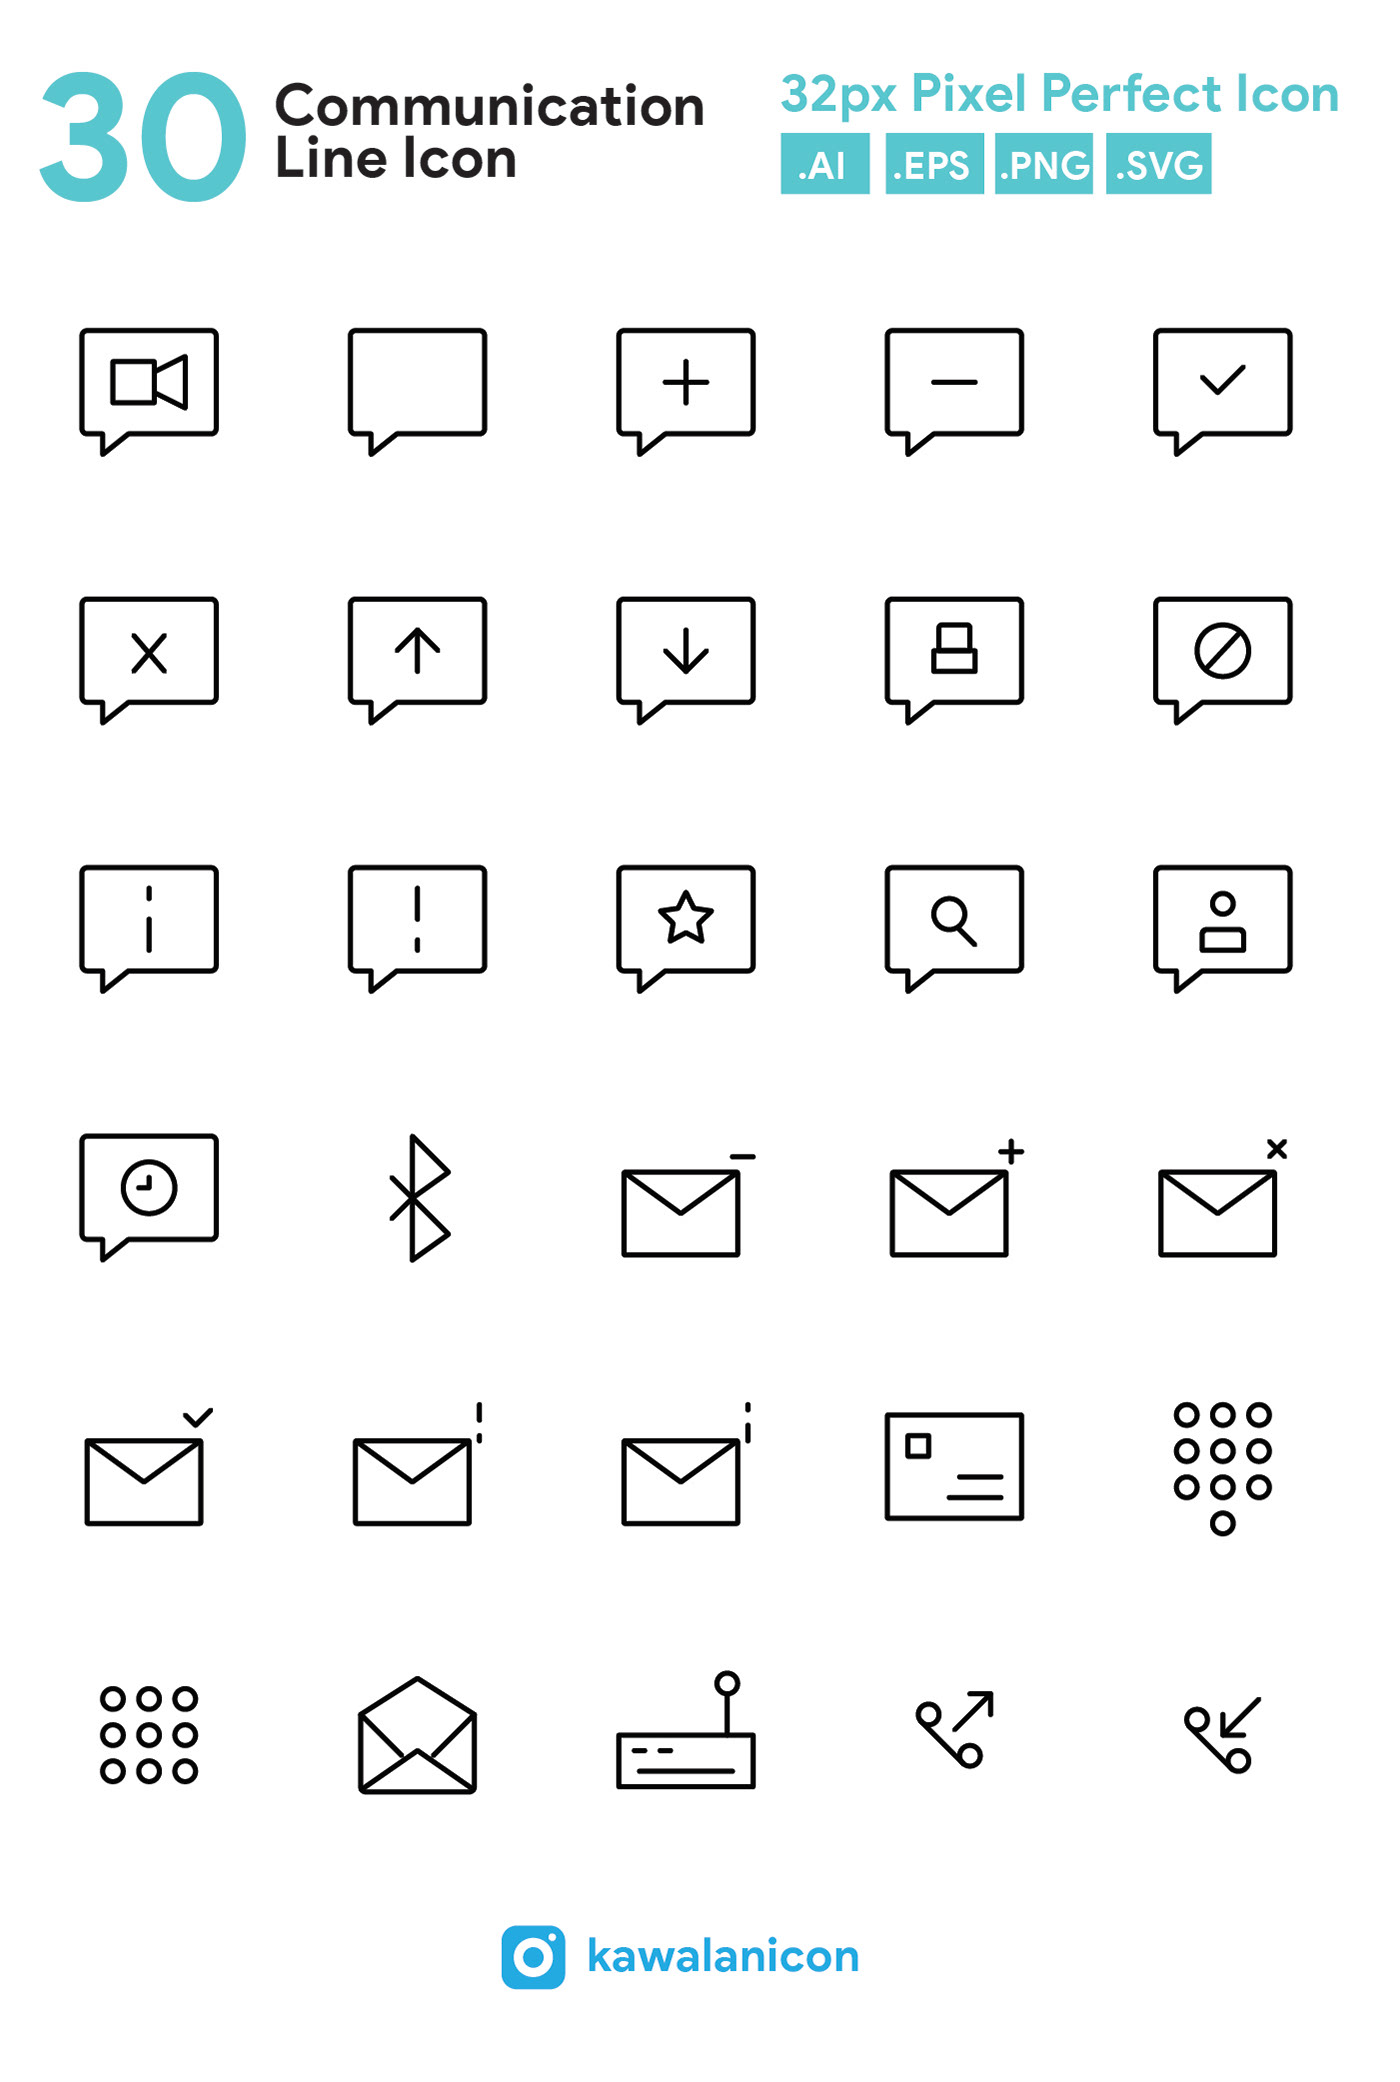 communication line icon icon set pixel perfect icon icons communication icon graphic design  UI ux icon design 